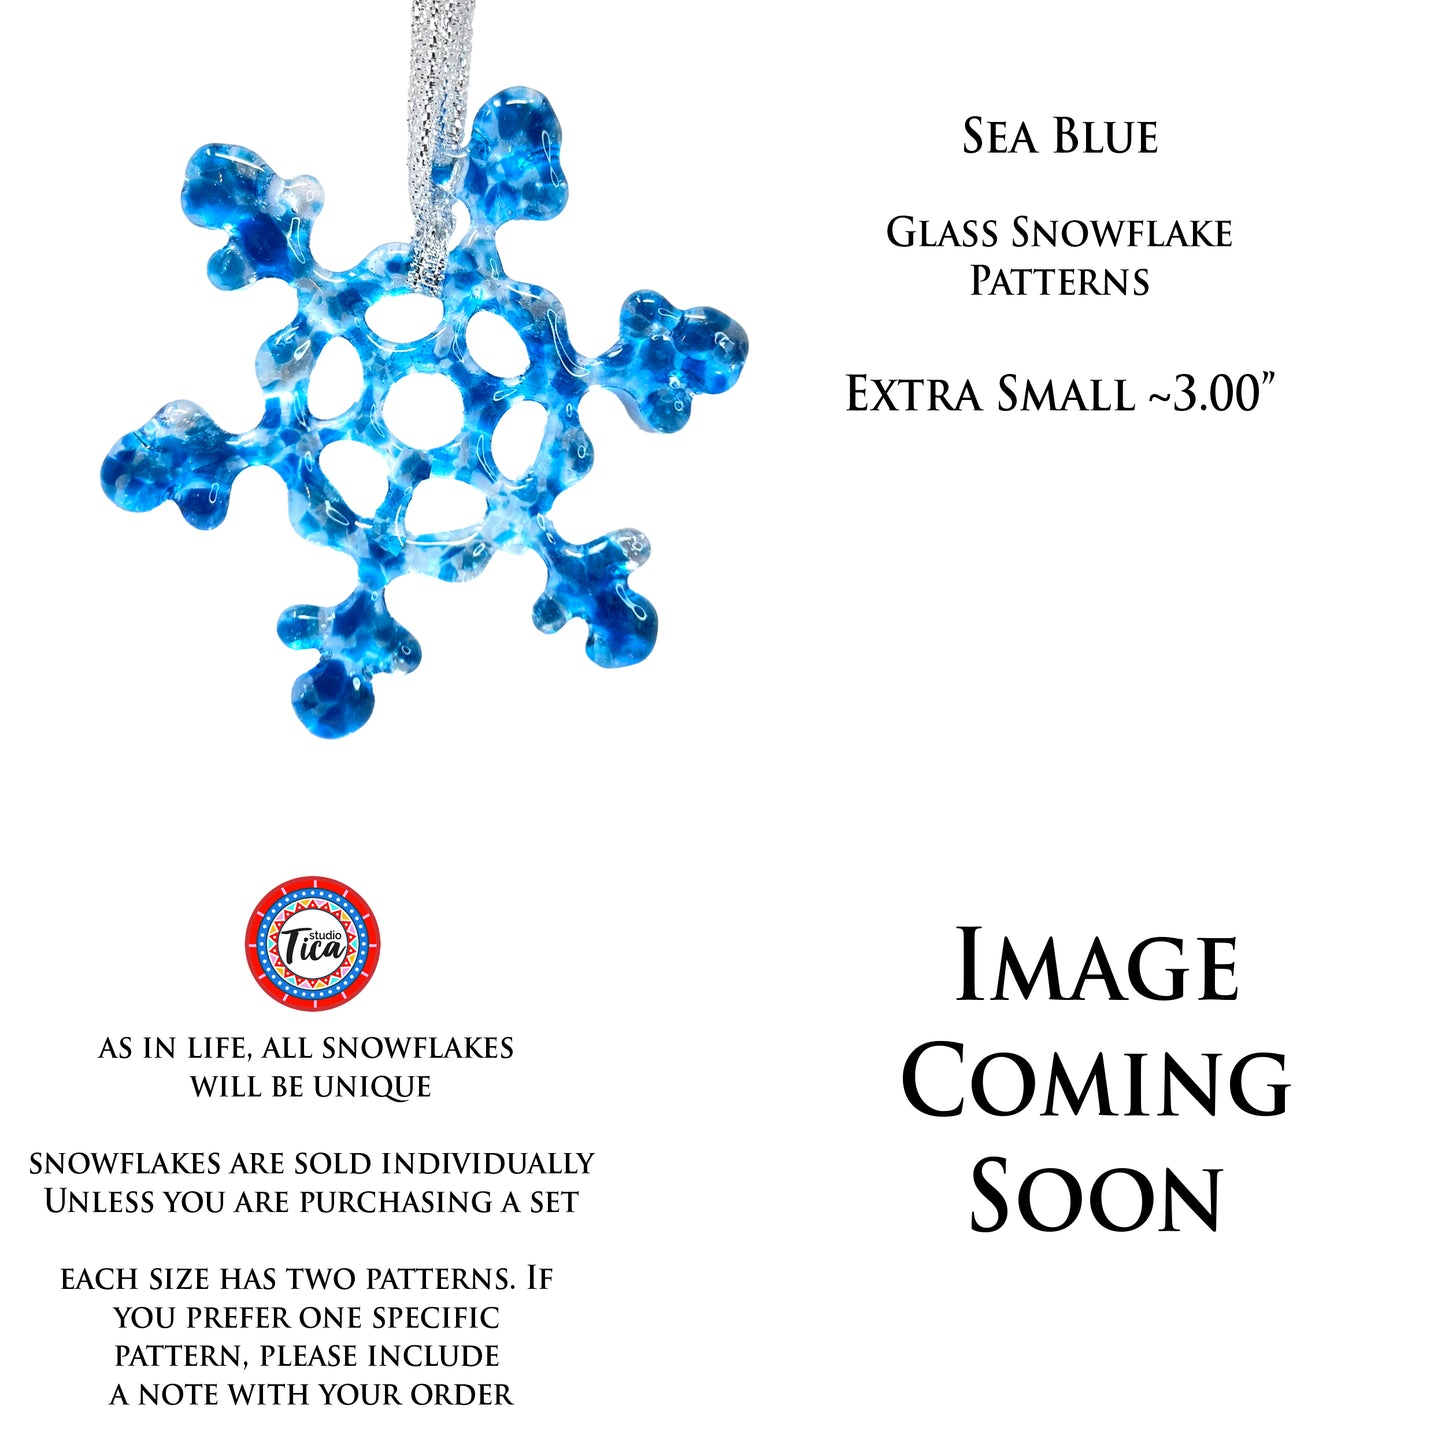 studioTica Sea Blue - Handmade Glass Snowflakes